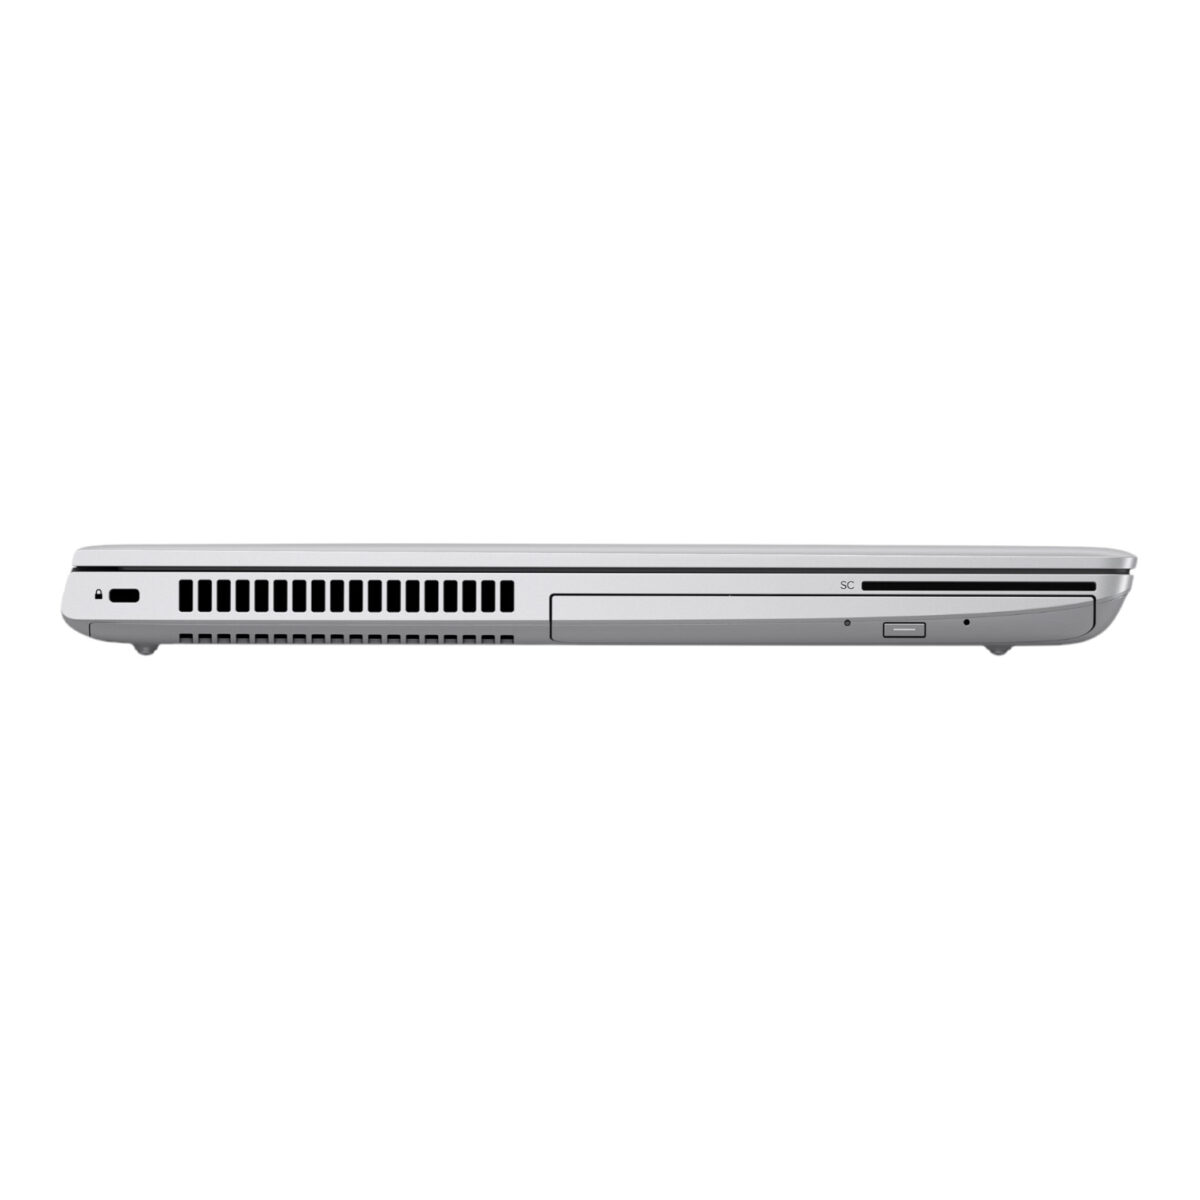 HP Probook 650 G5 15.6" FHD IPS ( i5-8265U / 8GB / 256GB NVMe )